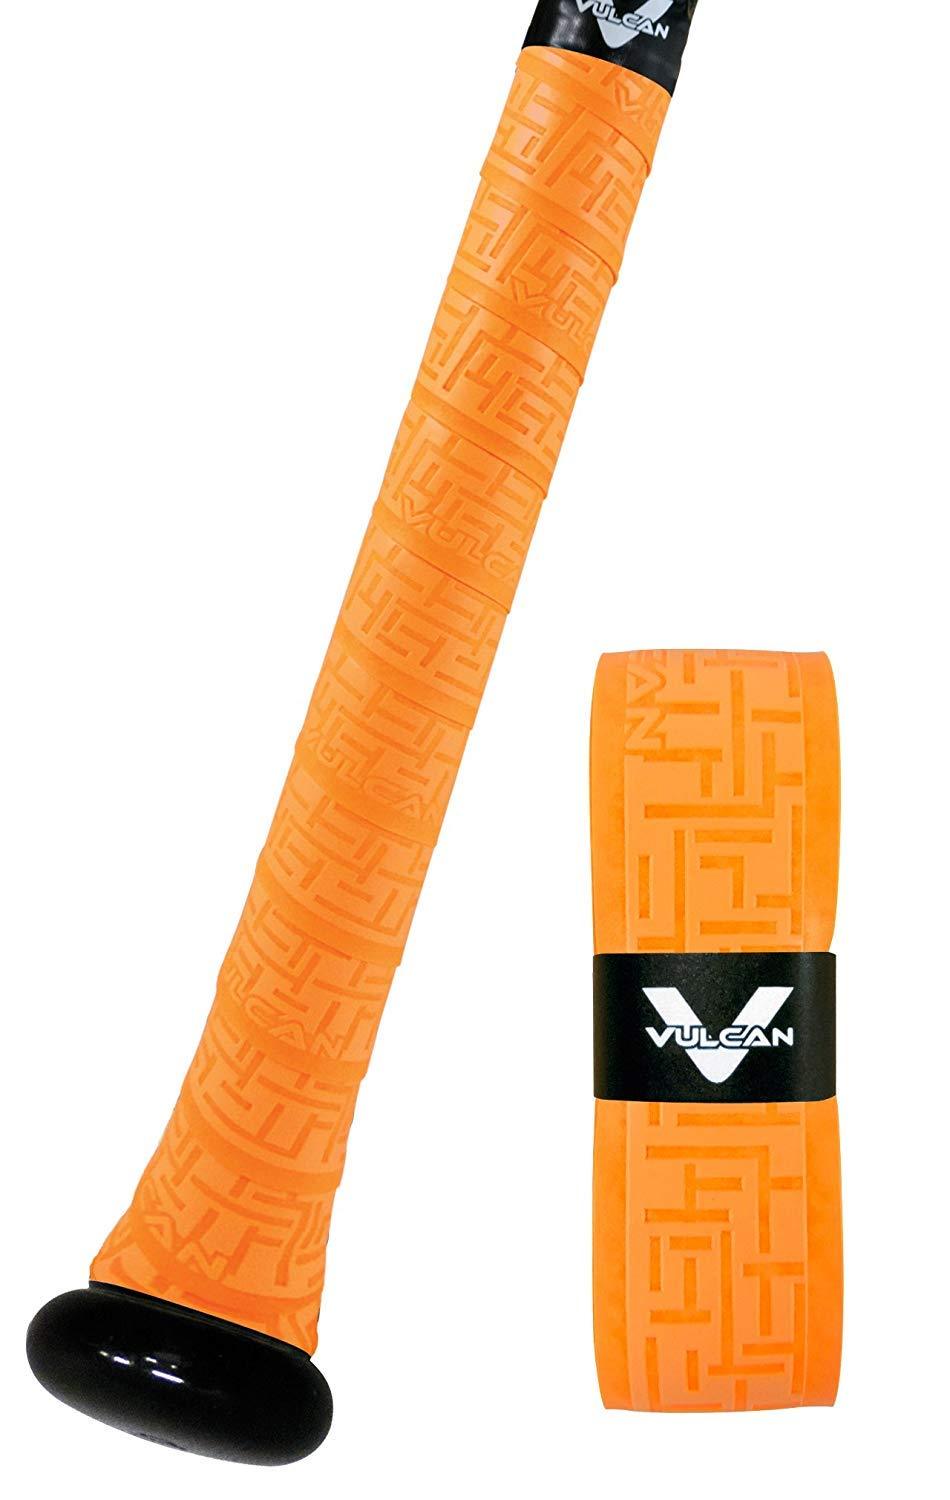 [AUSTRALIA] - Vulcan V100-ORG Bat Grip, Optic Orange, 1.00mm Bat Grip 